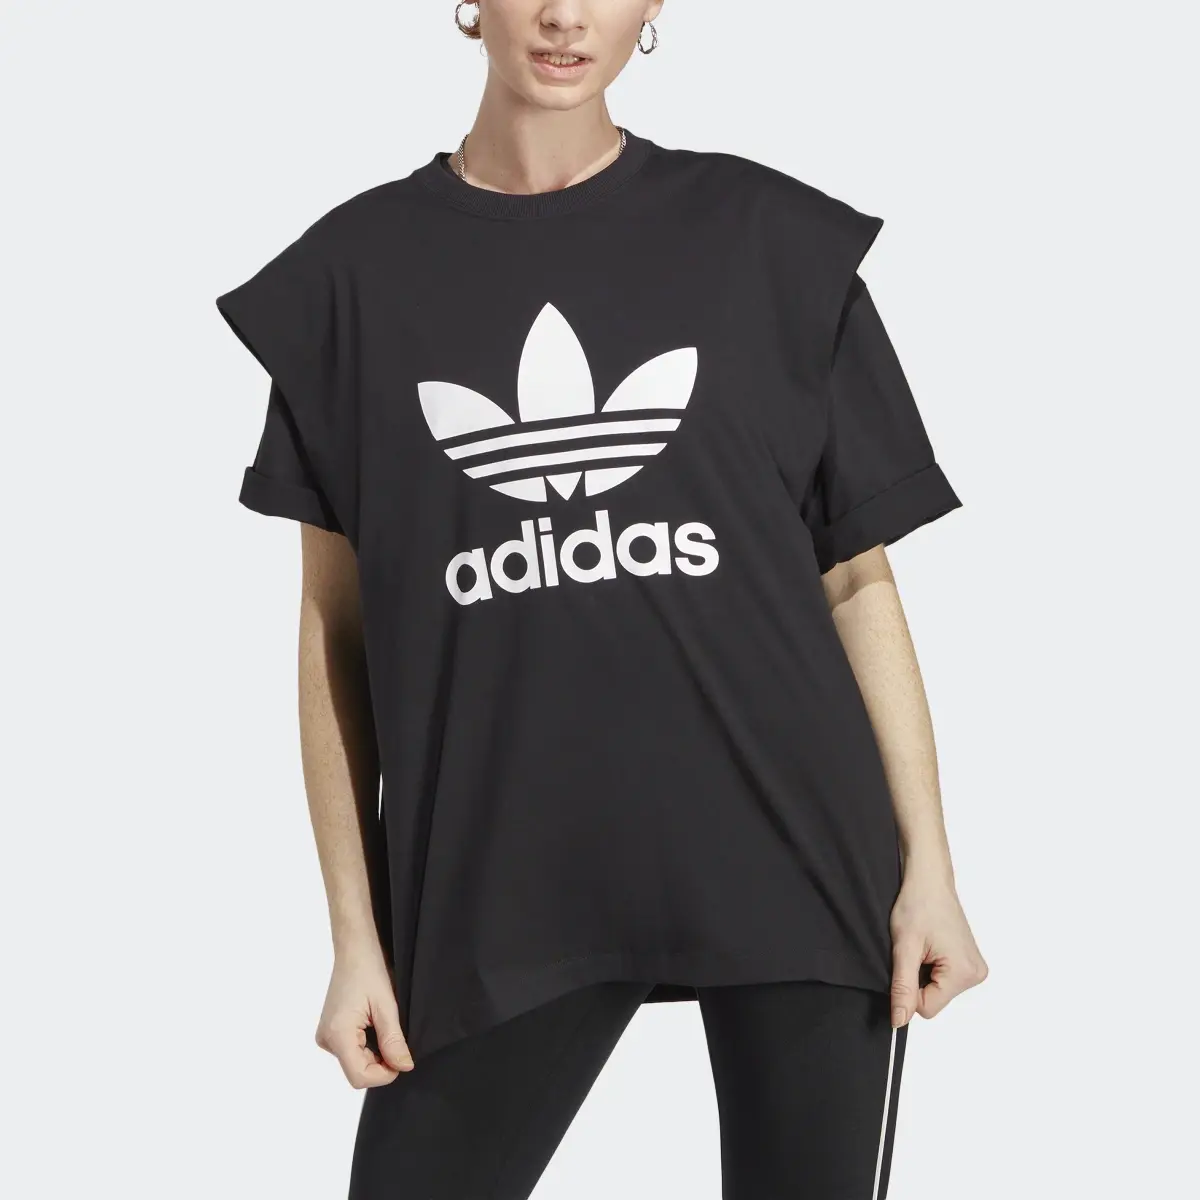 Adidas Always Original T-Shirt. 1